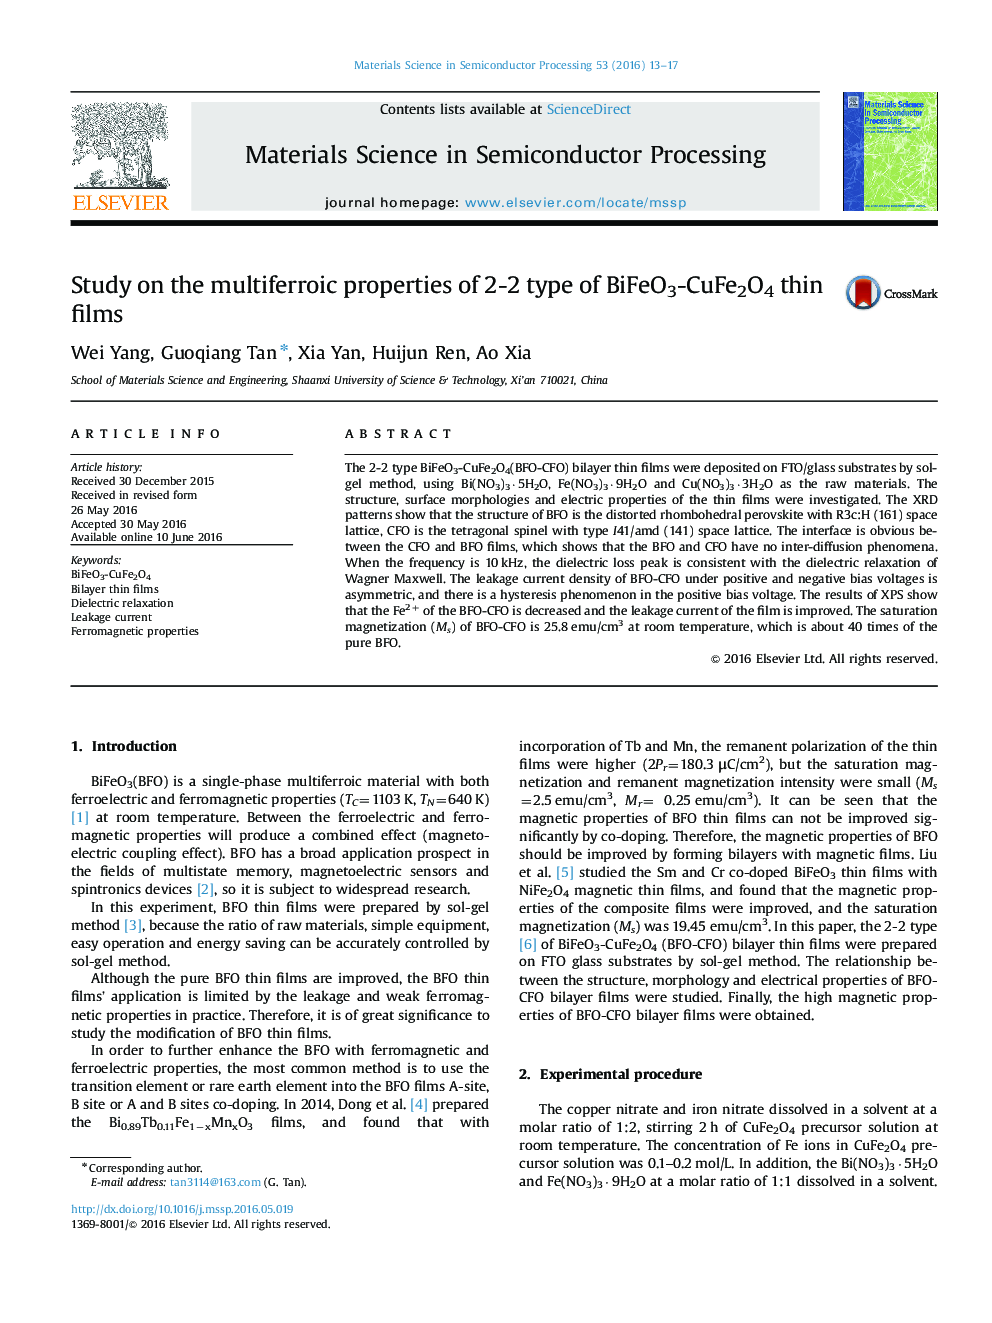 Study on the multiferroic properties of 2-2 type of BiFeO3-CuFe2O4 thin films